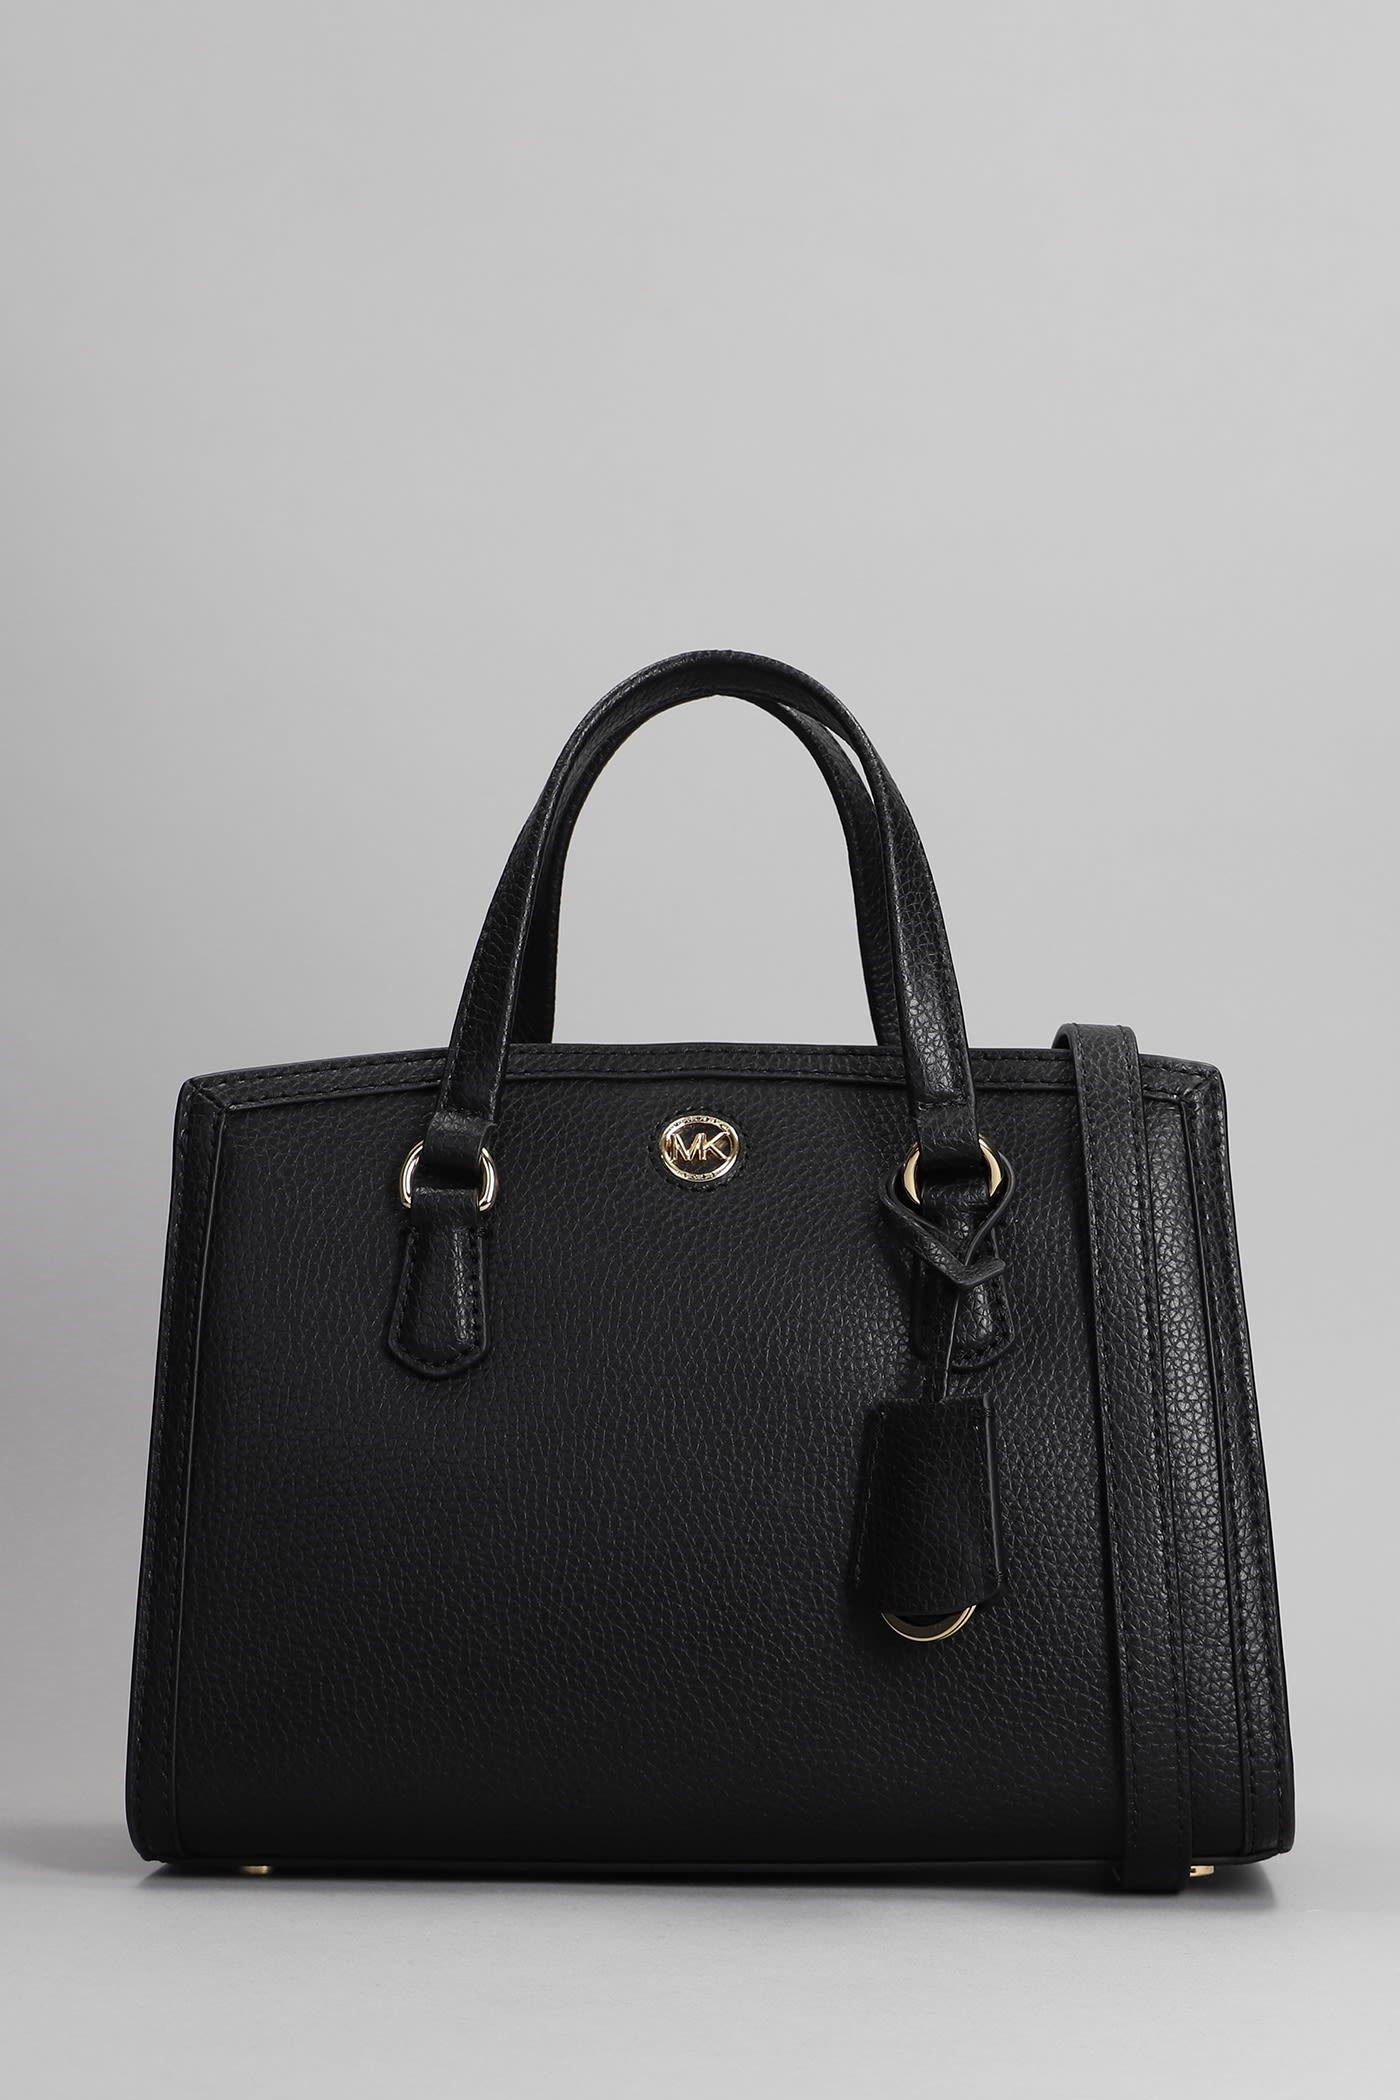 Michael Kors Chantal Hand Bag In Black Leather